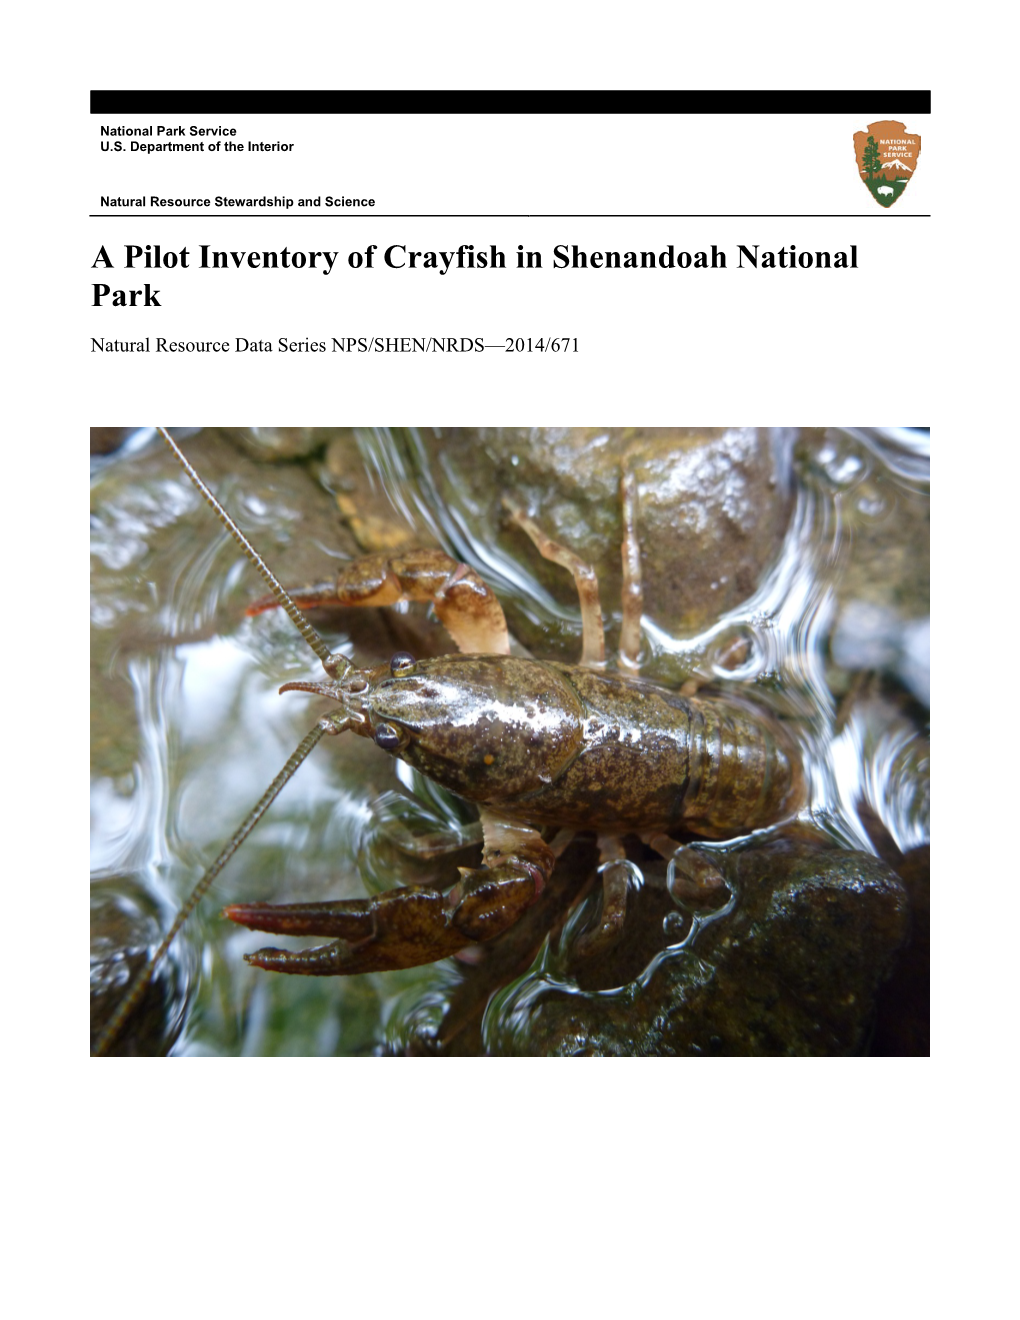 A Pilot Inventory of Crayfish in Shenandoah National Park